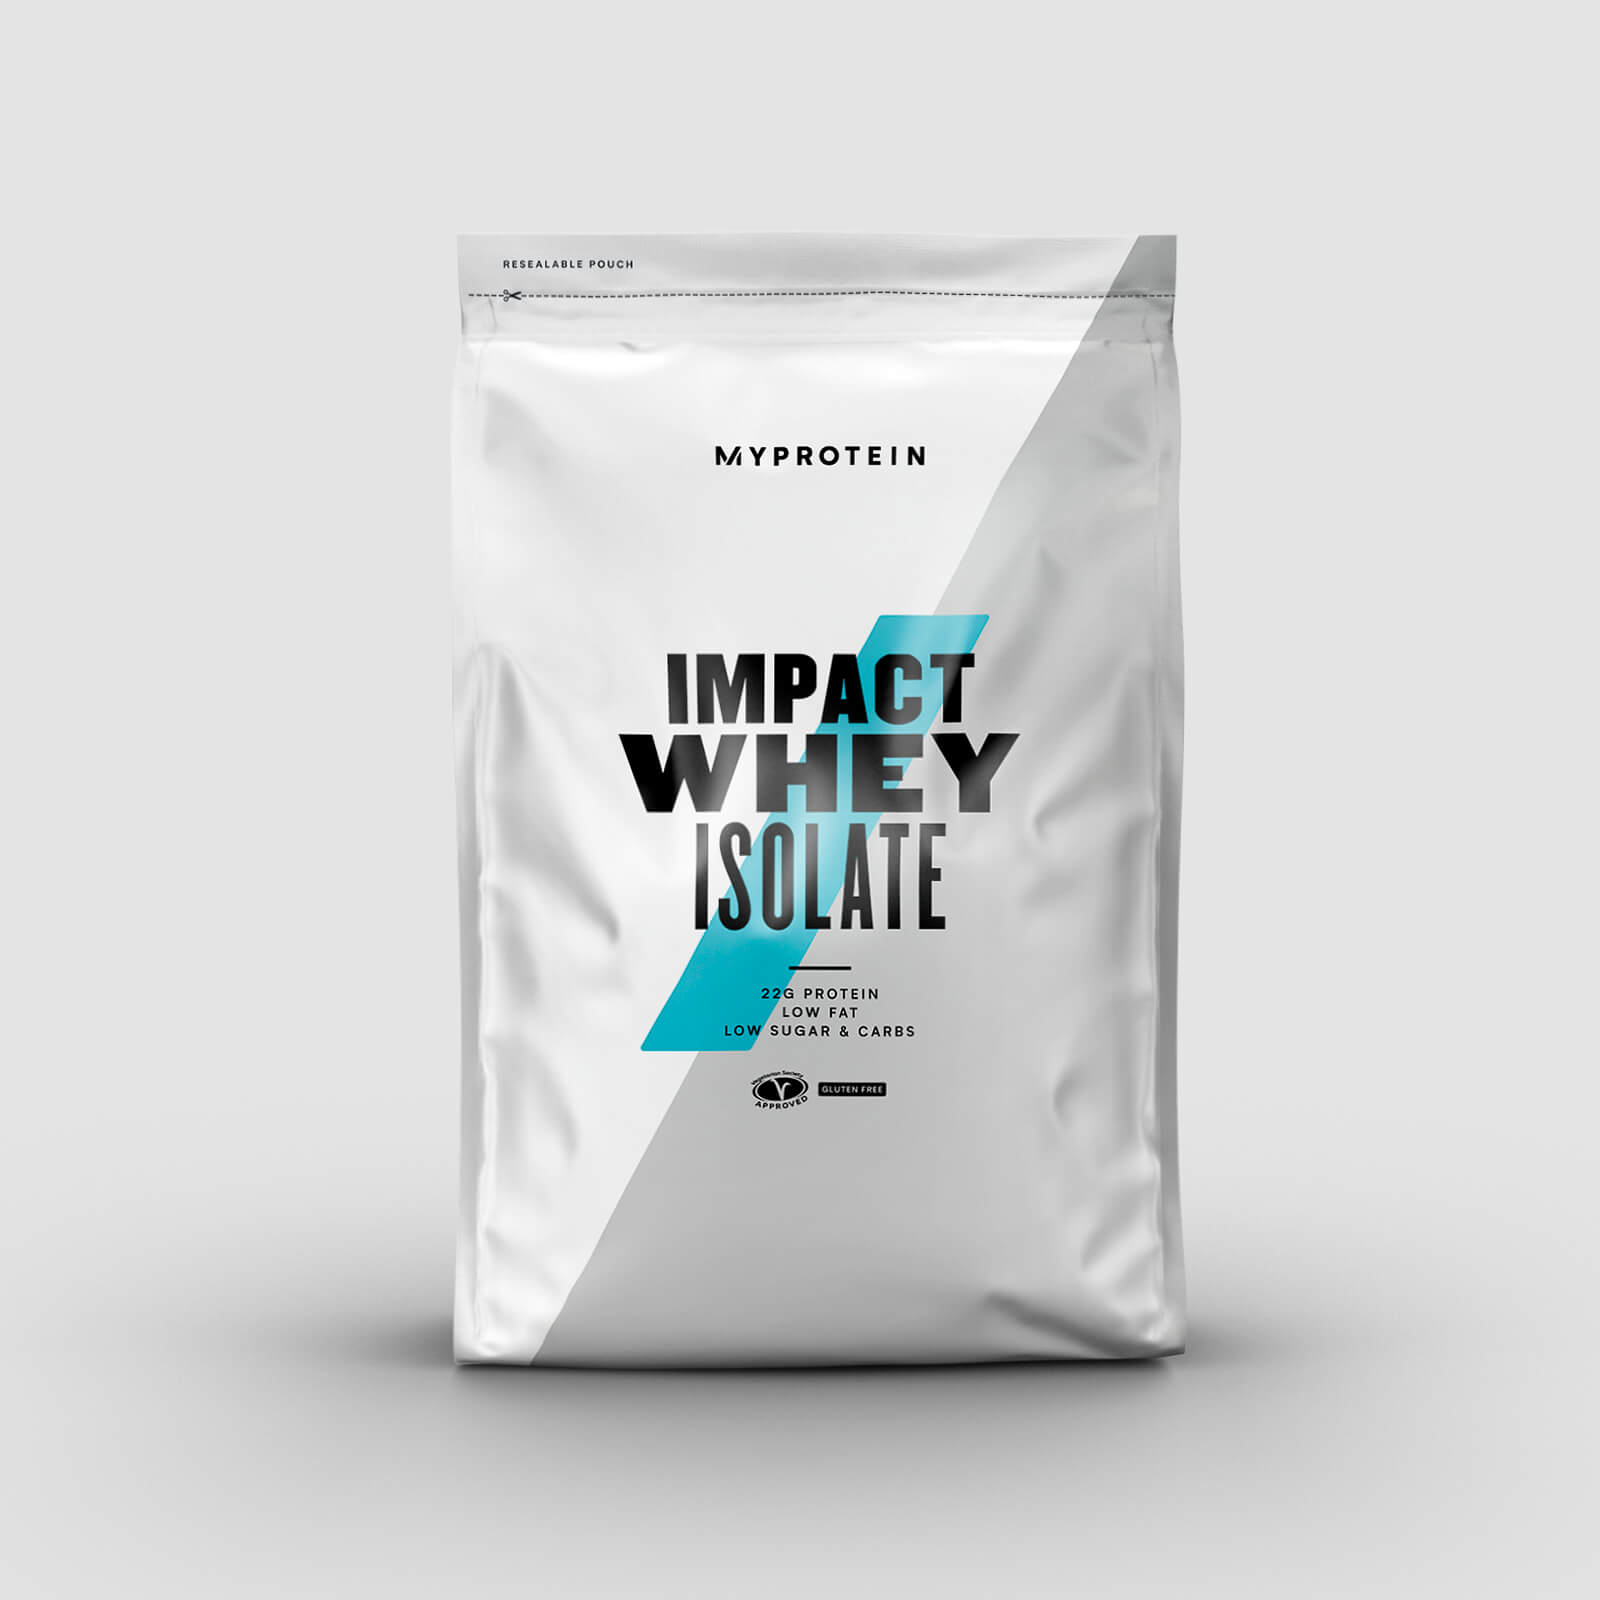 Myprotein Isolatprotein - Impact Whey Isolate - 1kg - Chocolate Mint